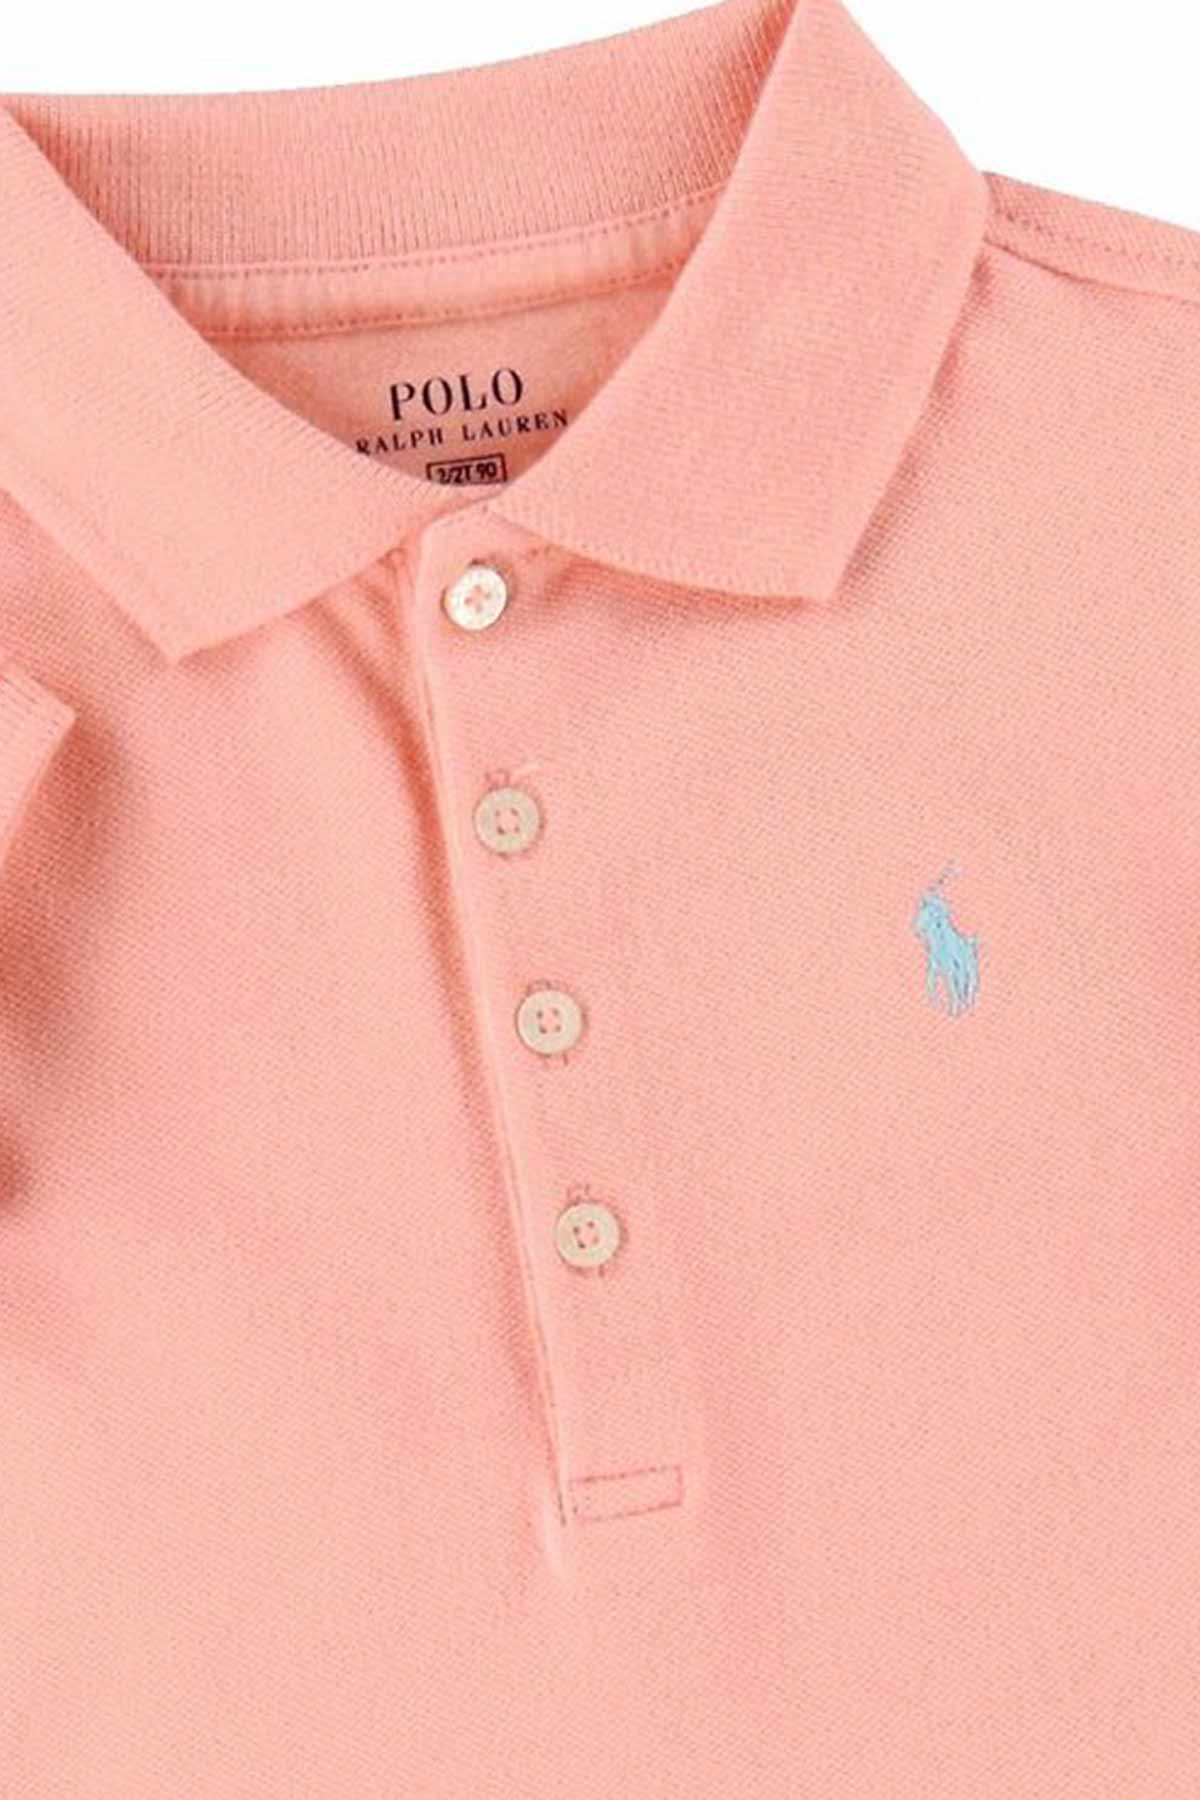 Polo Ralph Lauren 3-4 Yaş Kız Çocuk Polo Yaka T-shirt-Libas Trendy Fashion Store